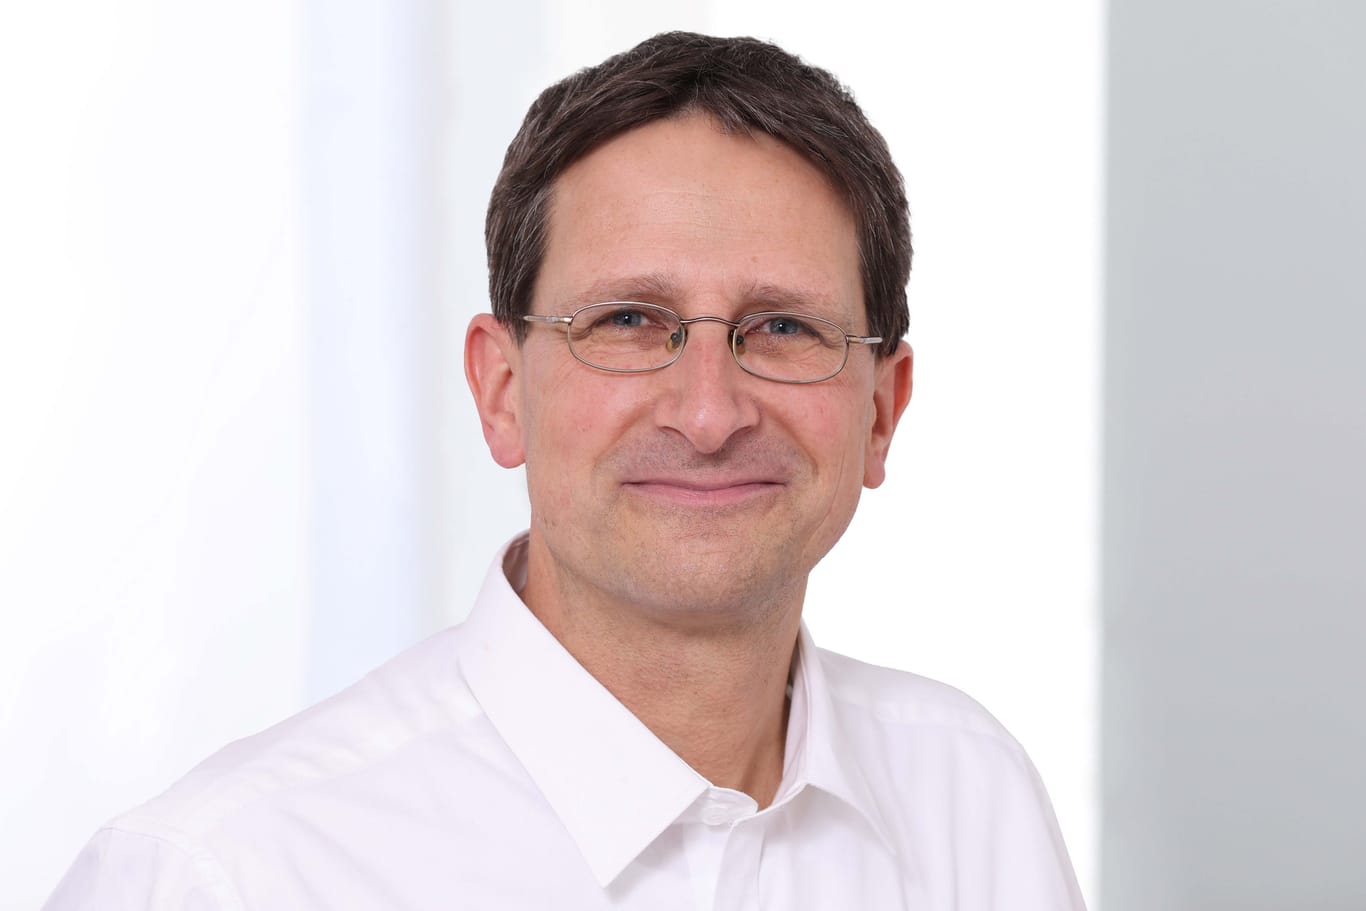 PD Dr. Dr. Christoph Dietrich